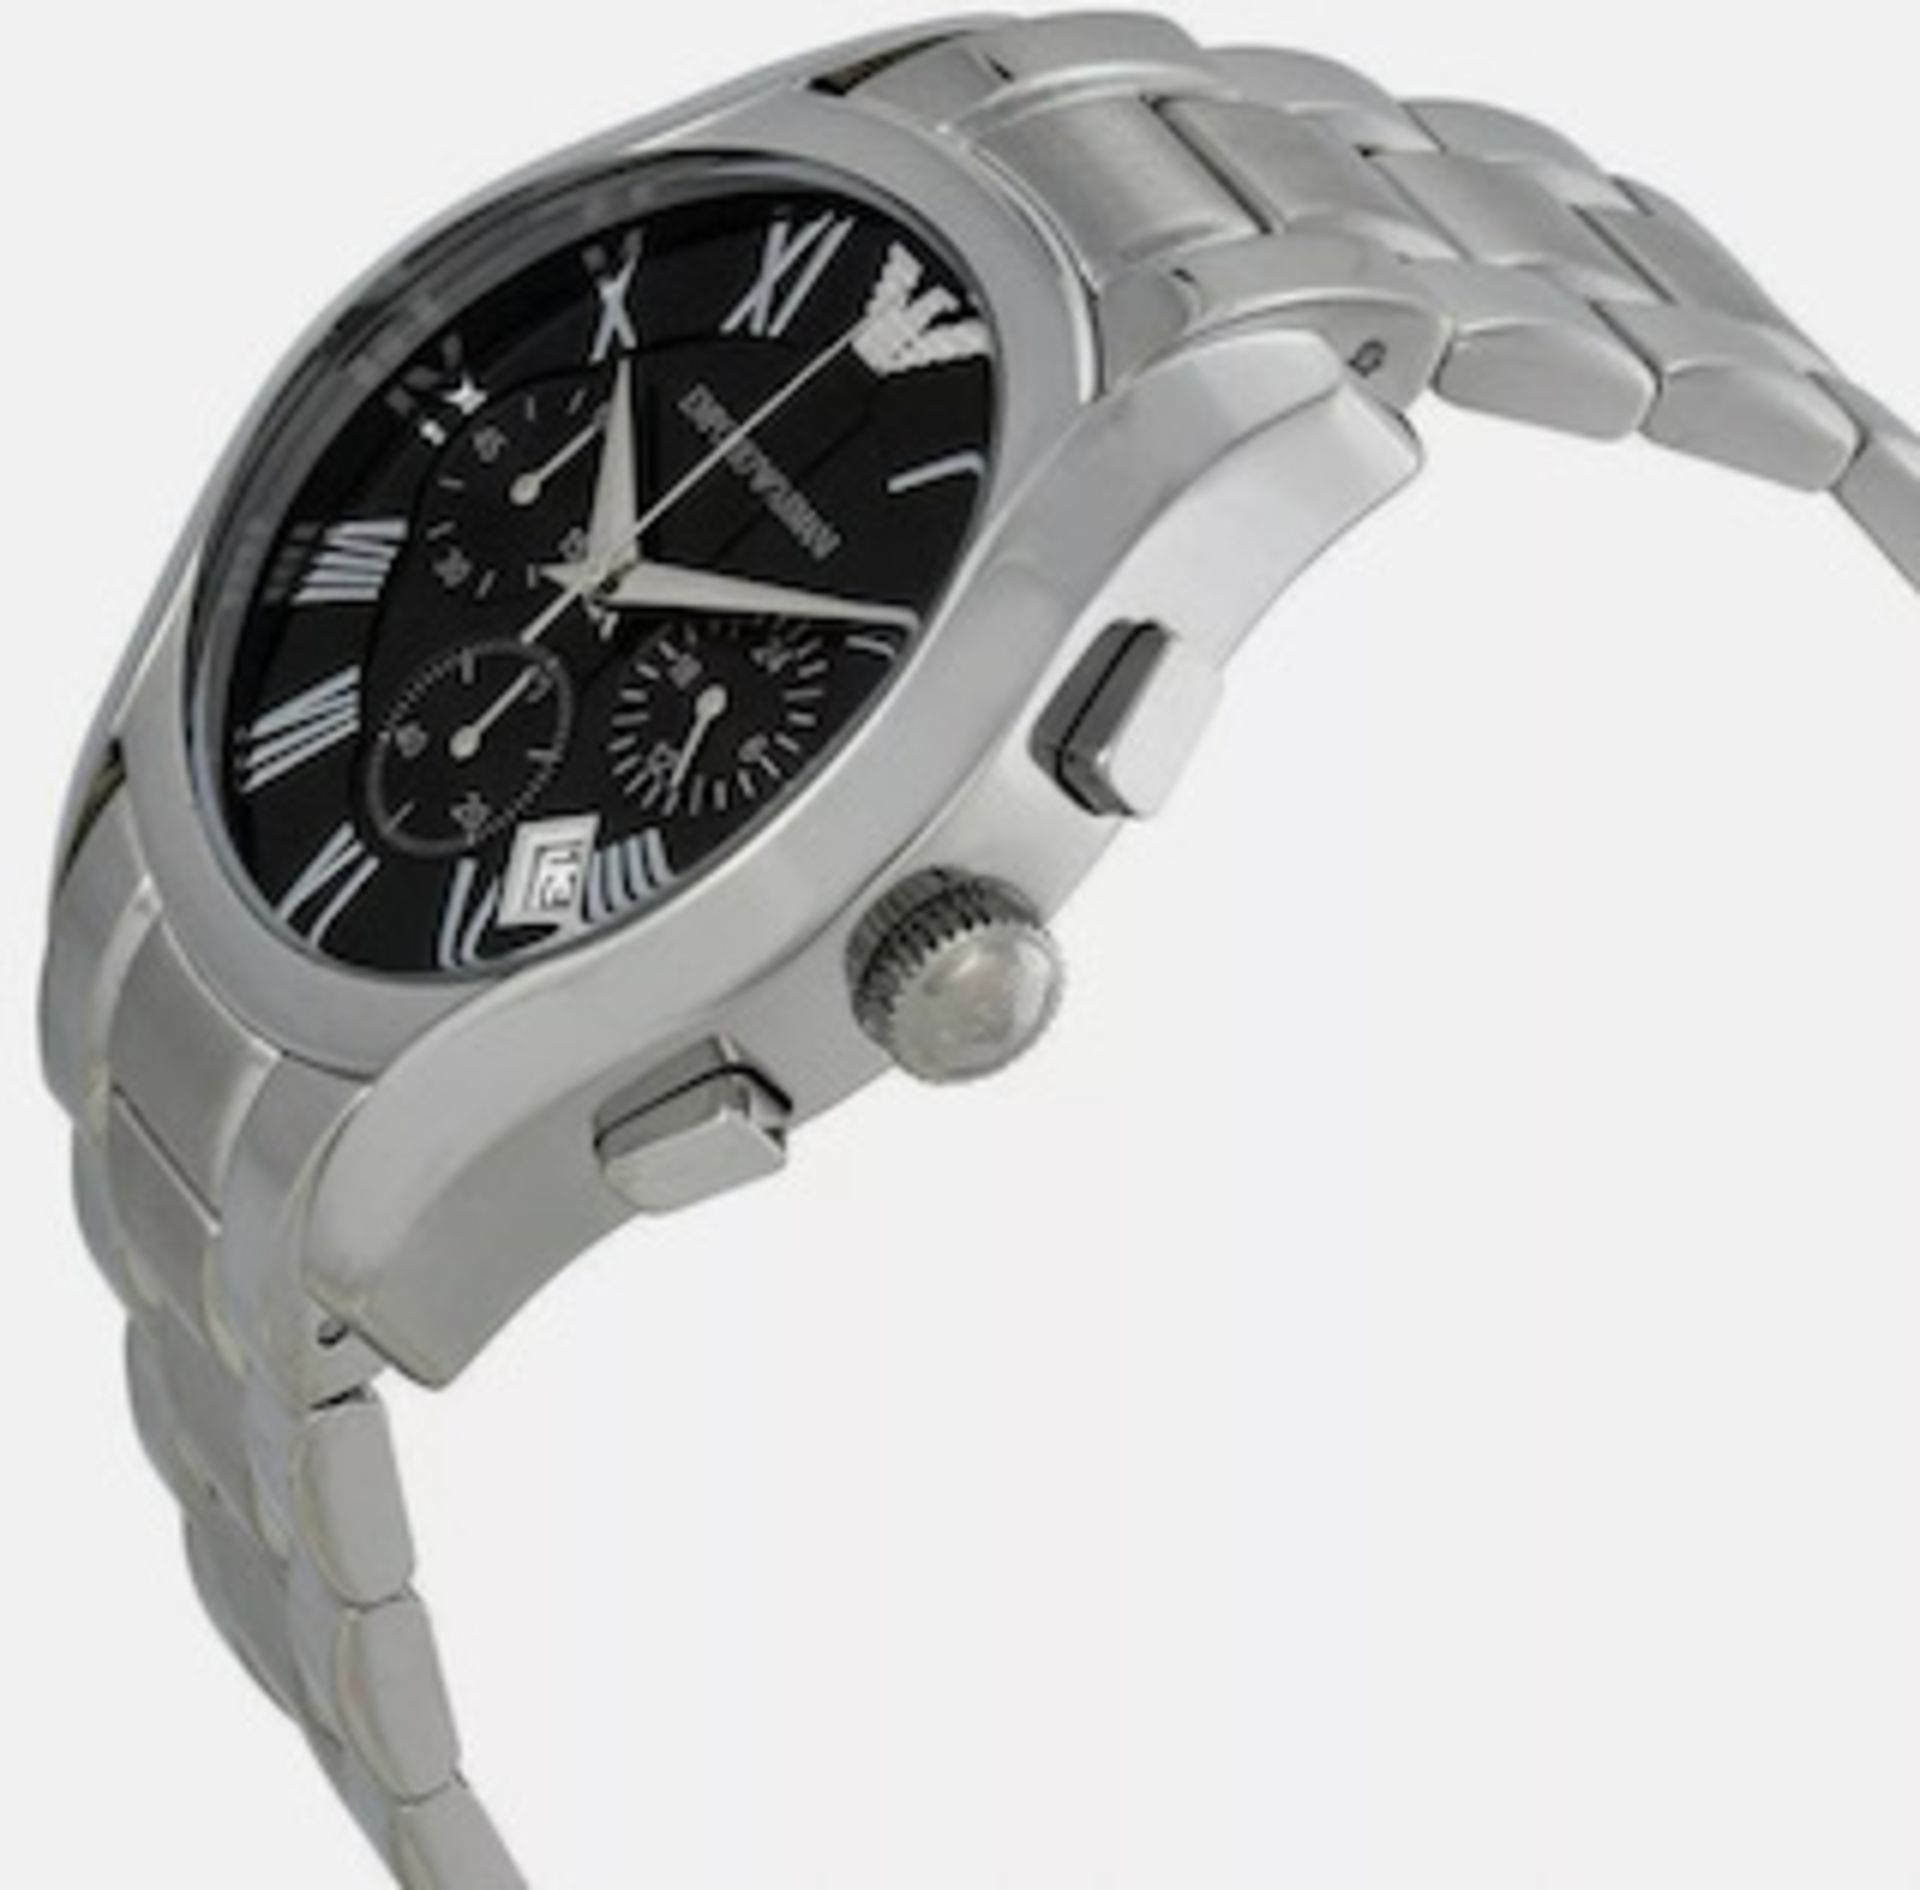 Emporio Armani AR0673 Men's Black Dial Silver Bracelet Quartz Chronograph Watch - Image 3 of 8